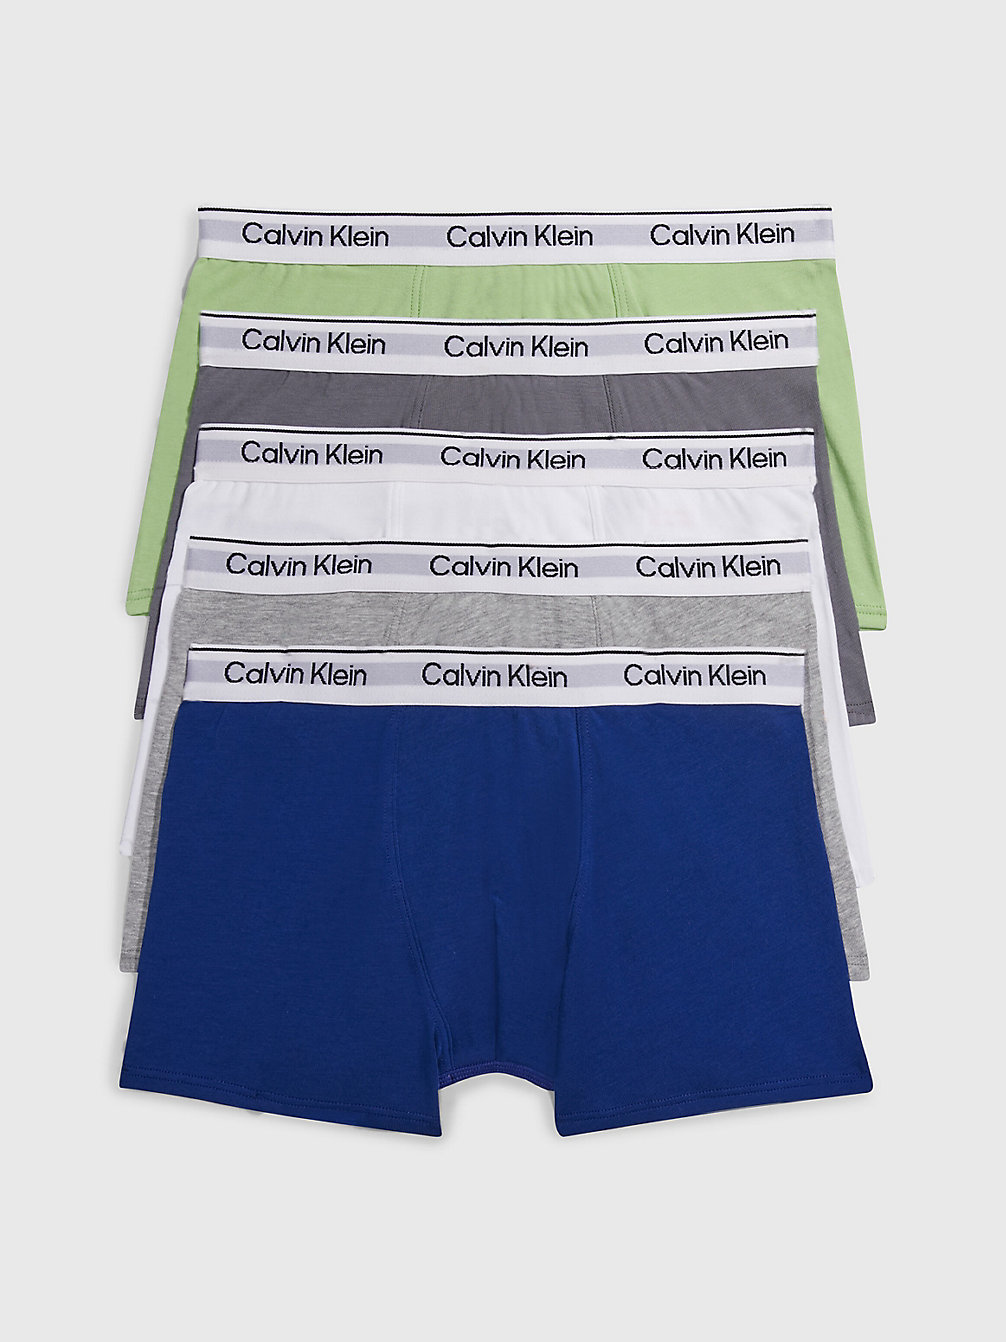 BBLUE/SPRINGF/ASFALTG/PWHITE/GHETHR 5 Pack Boys Trunks - Modern Cotton undefined boys Calvin Klein